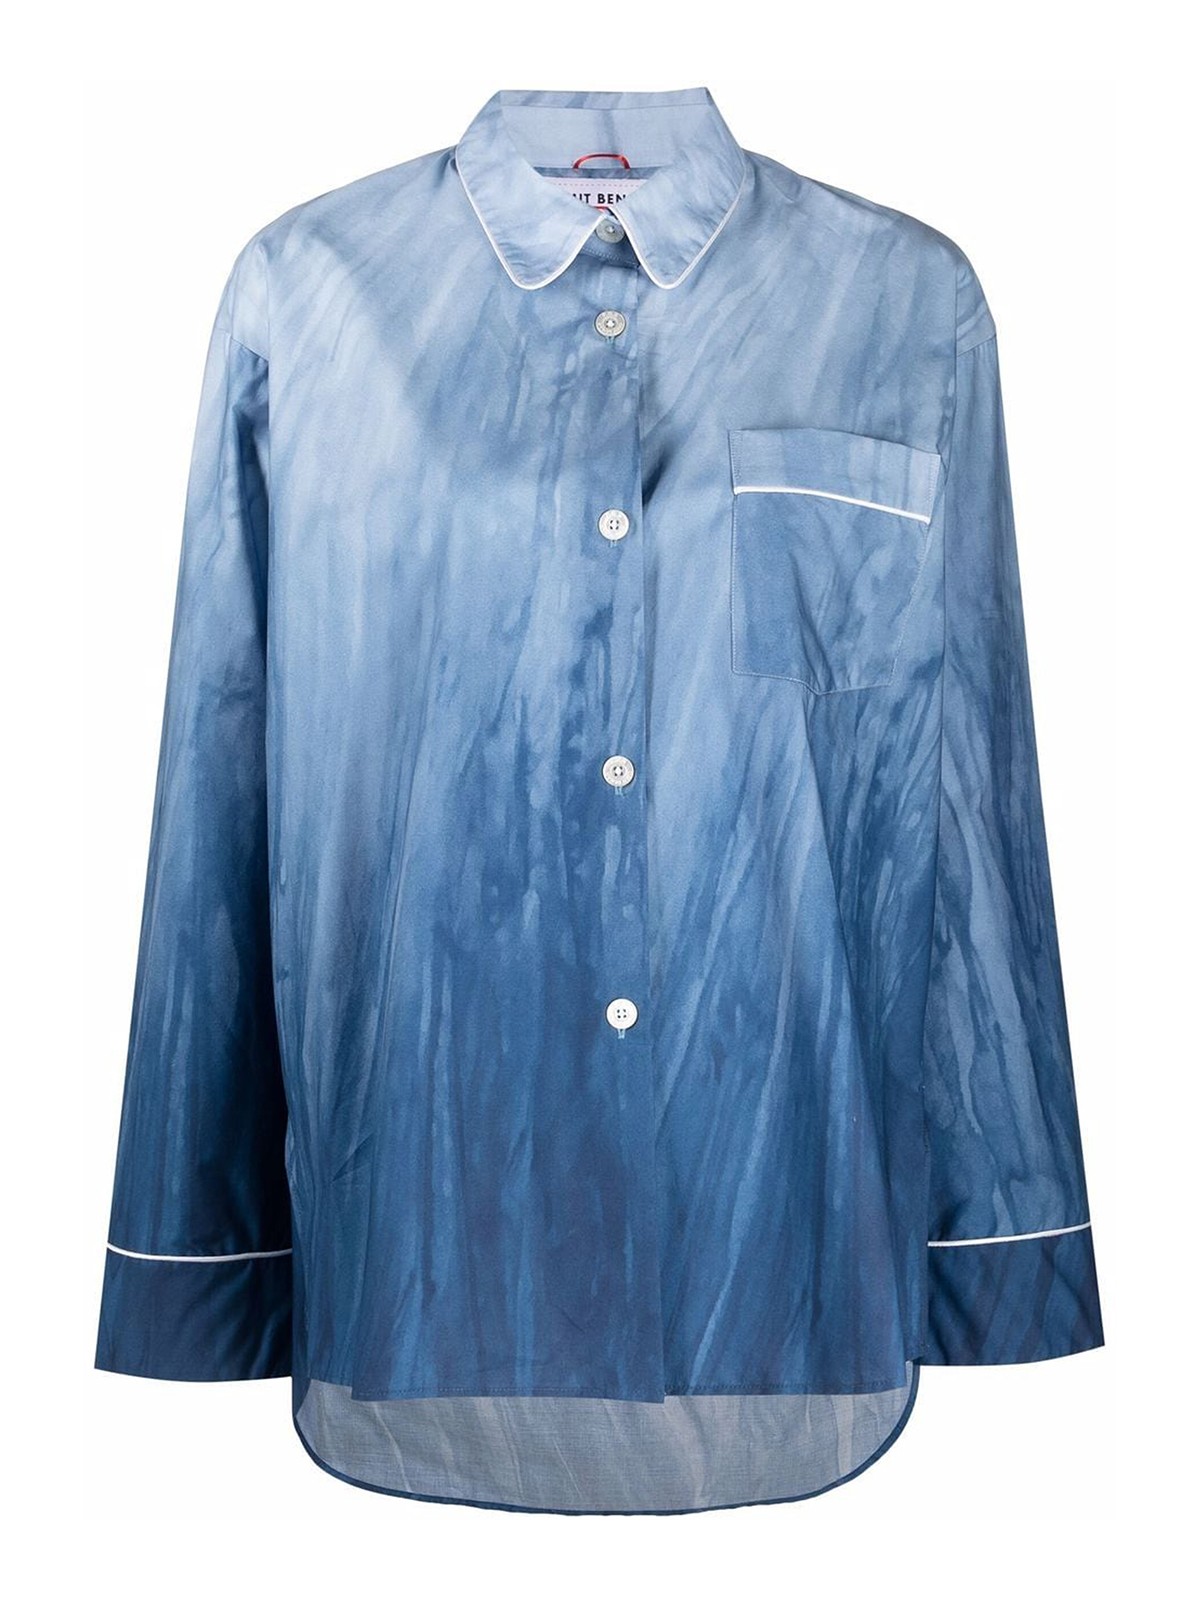 Umit Benan Jean Die-dye Print Cotton Shirt In Azul